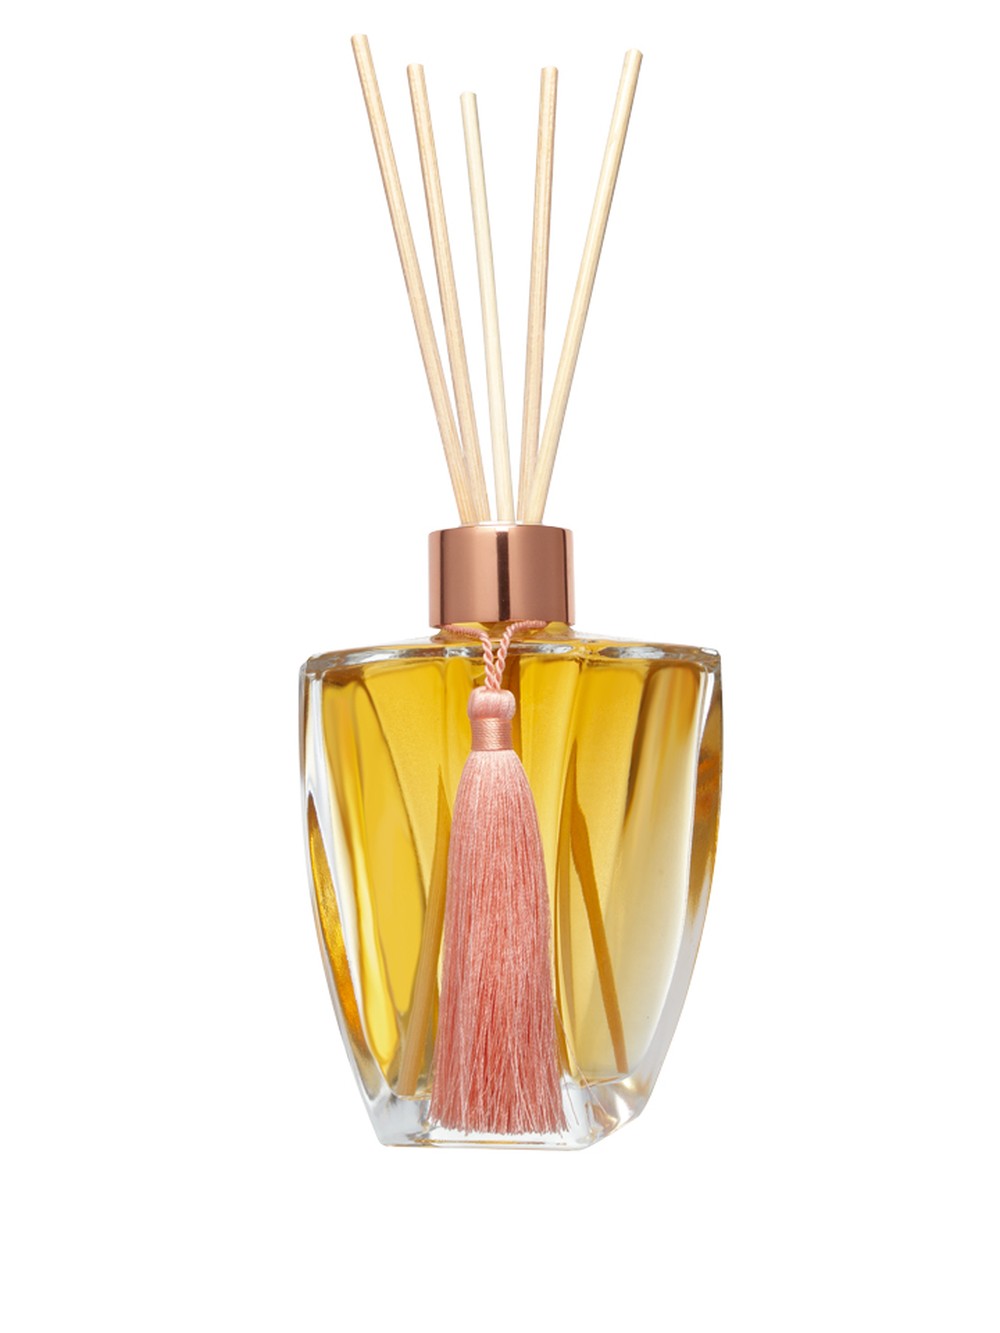 Difusor de Perfume Patchouli Vanilla - Decor 220ml